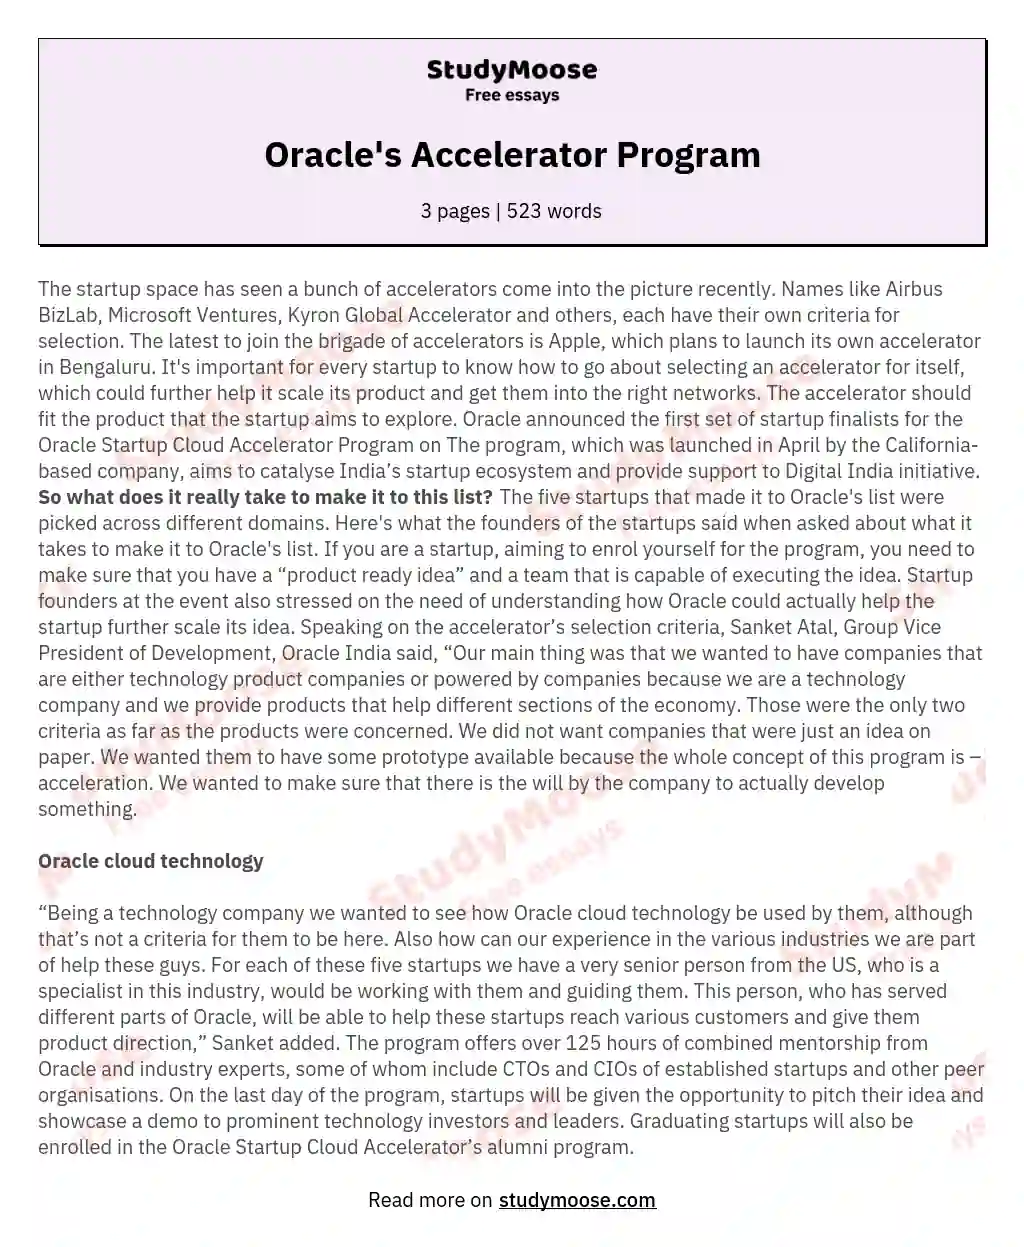 Oracle's Accelerator Program essay